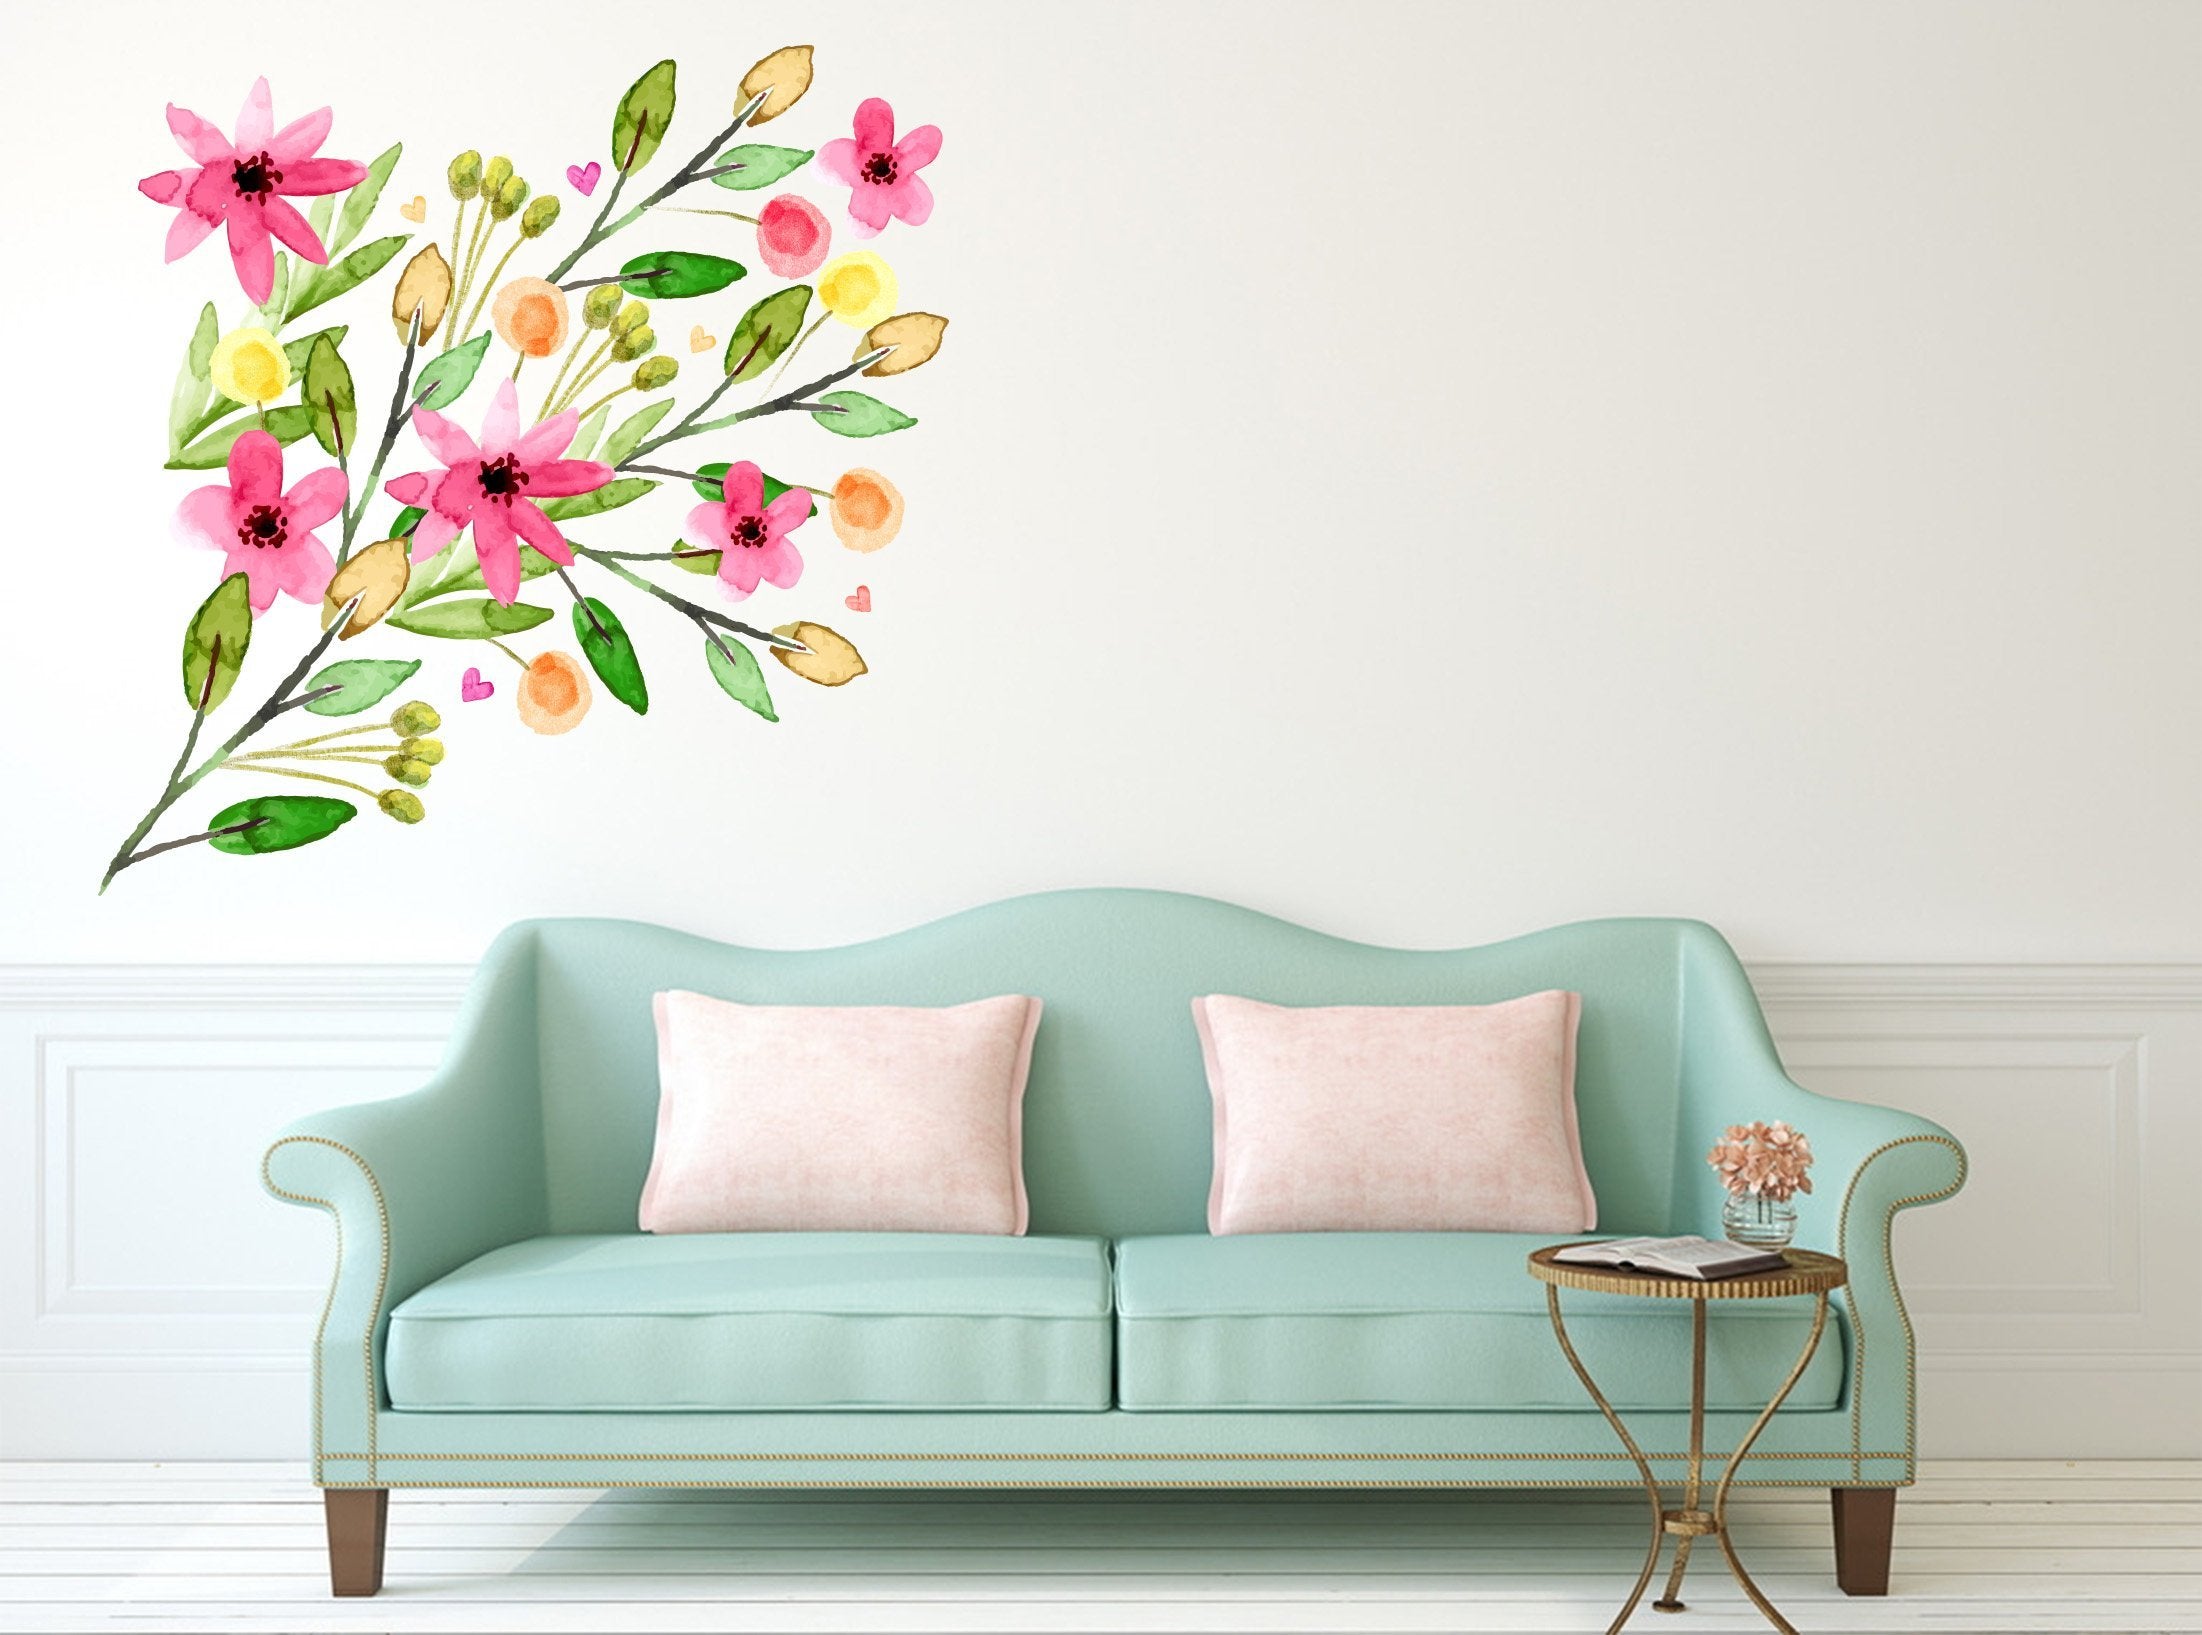 3D Flowerbed Leaves 248 Wall Stickers Wallpaper AJ Wallpaper 